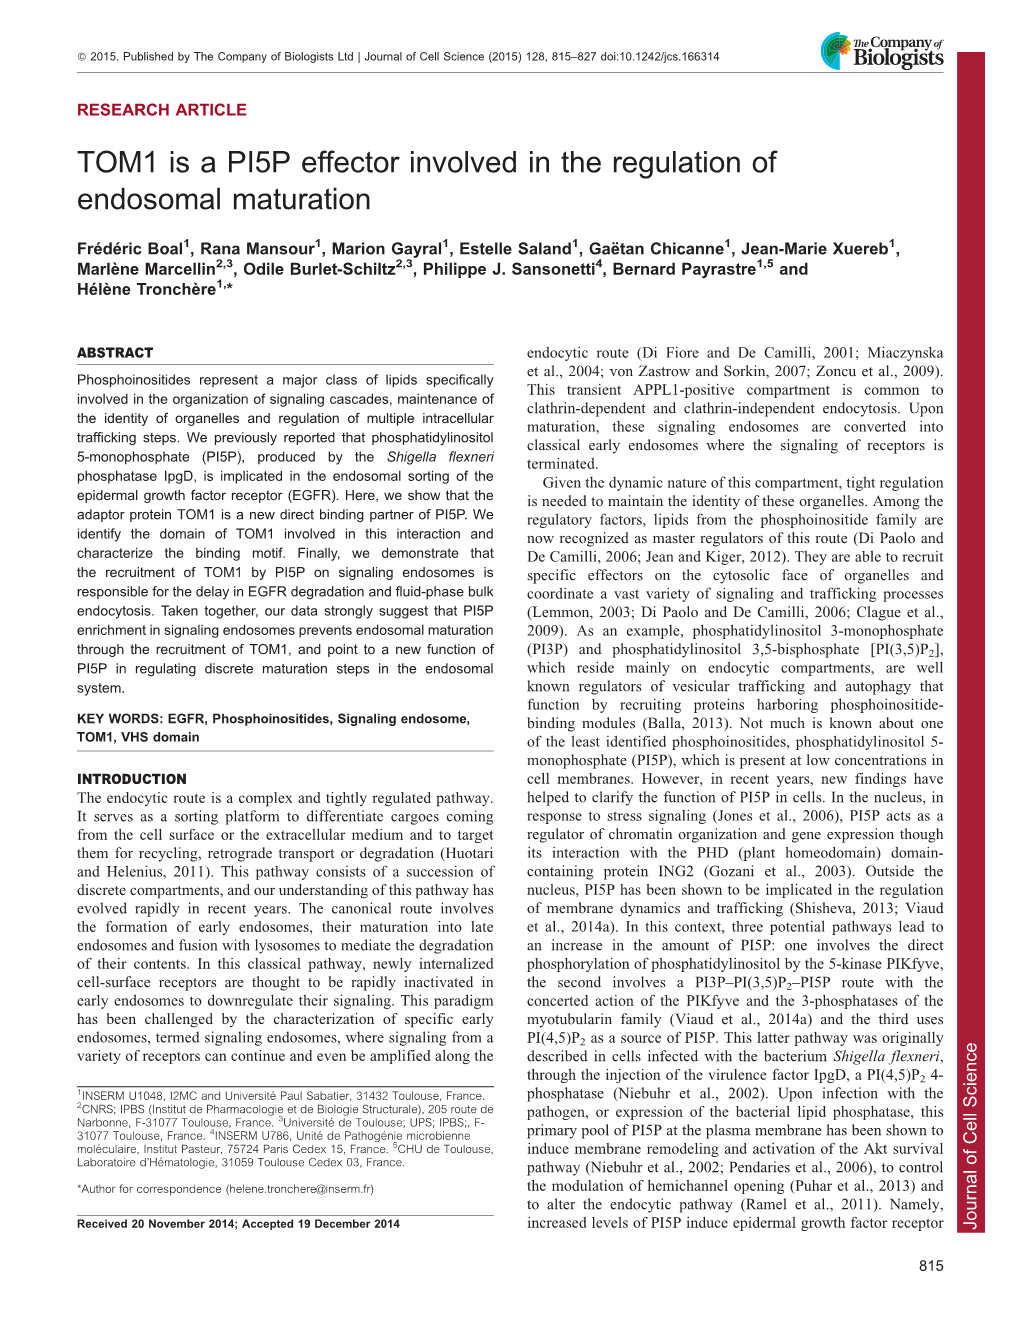 TOM1 Is a PI5P Effector Involved in the Regulation of Endosomal Maturation